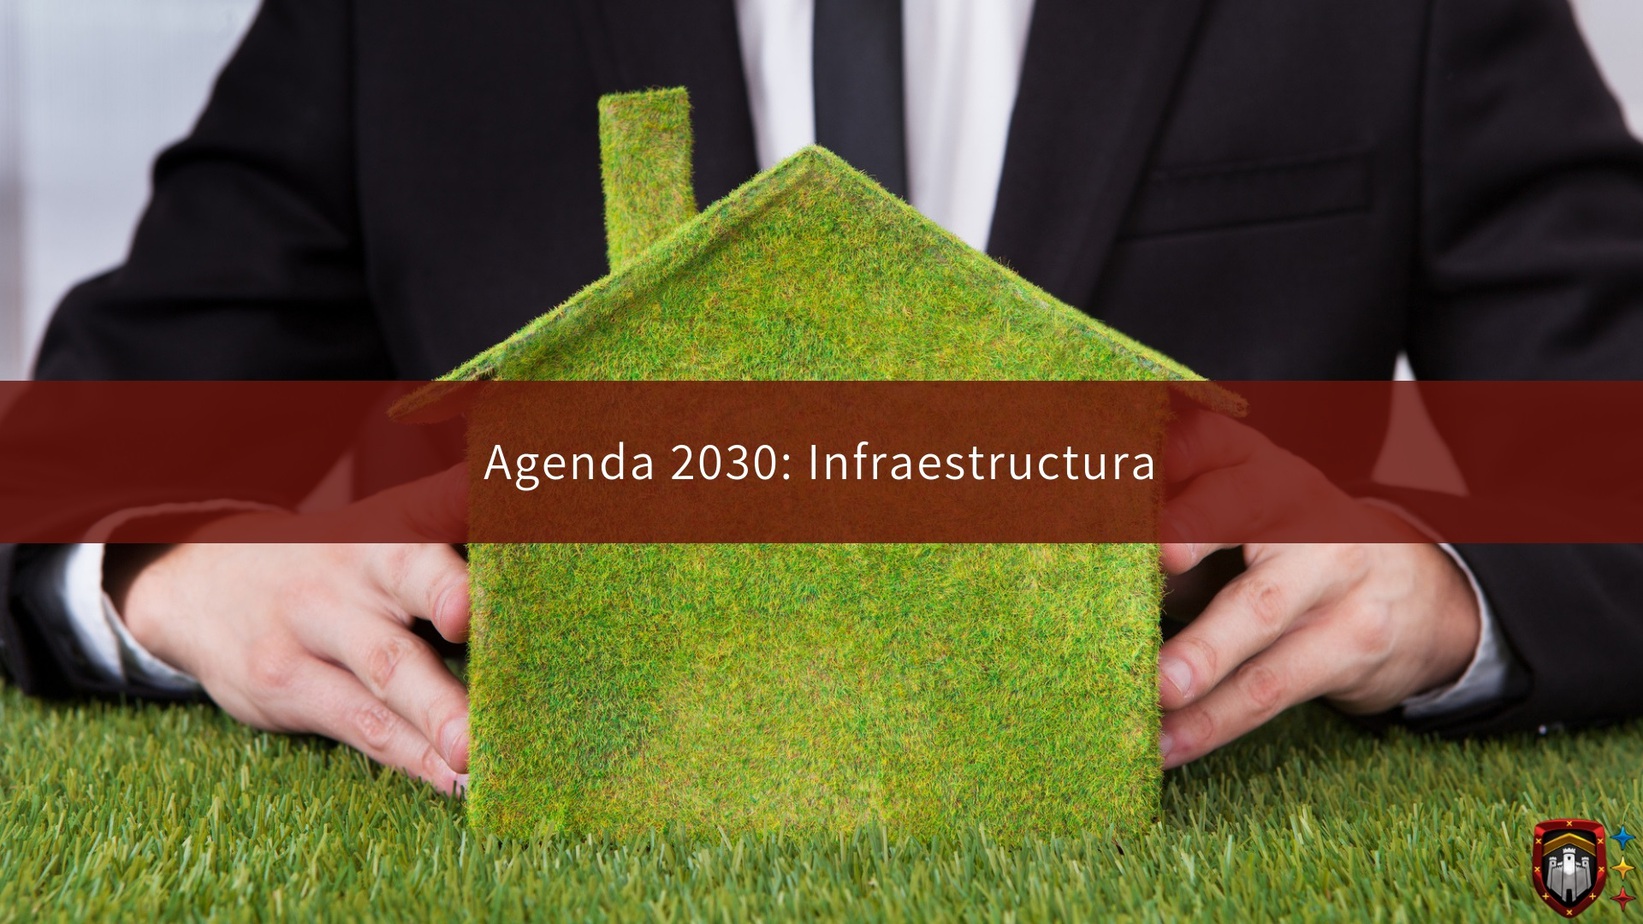 Agenda 2030 infraestructura 02